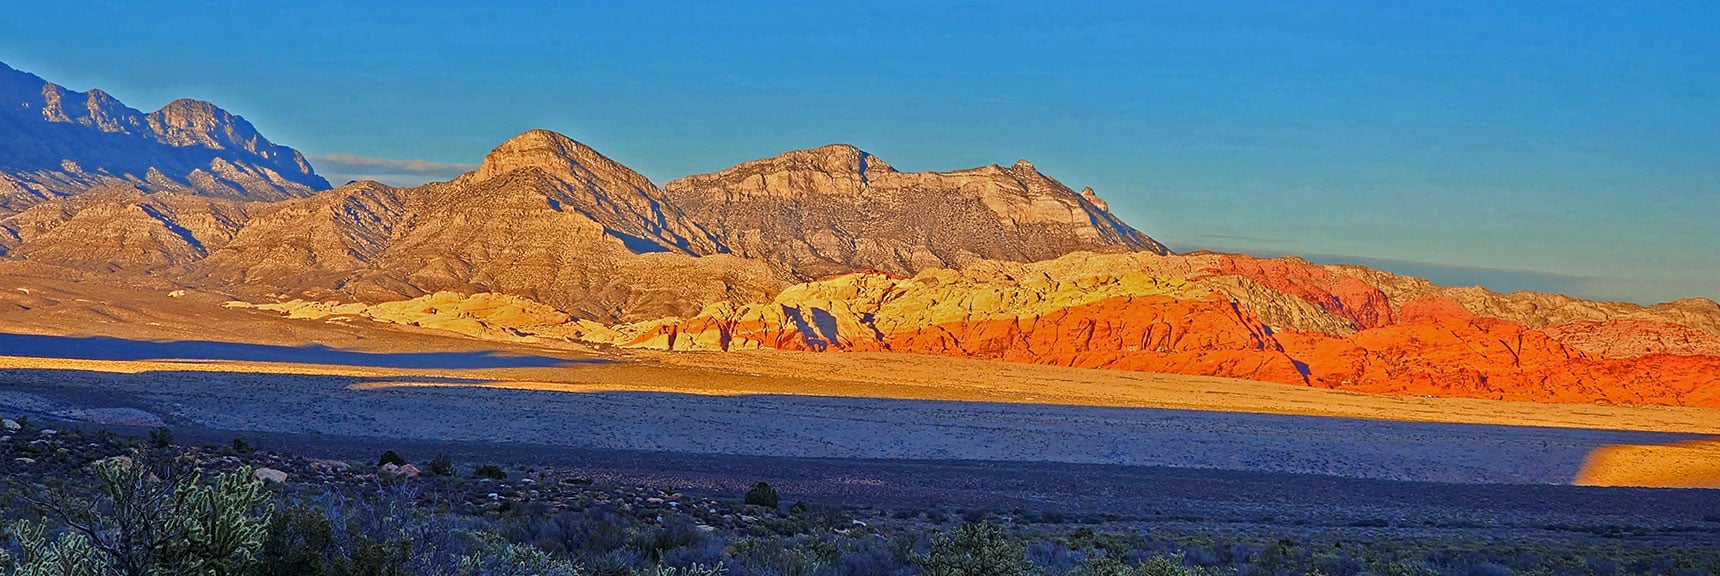 Left to Right: Turtlehead Peak, Damsel Peak, Calico Hills | Oak Creek Canyon North Branch Toward Rainbow Mountains Upper Crest Ridgeline | Rainbow Mountain Wilderness, Nevada